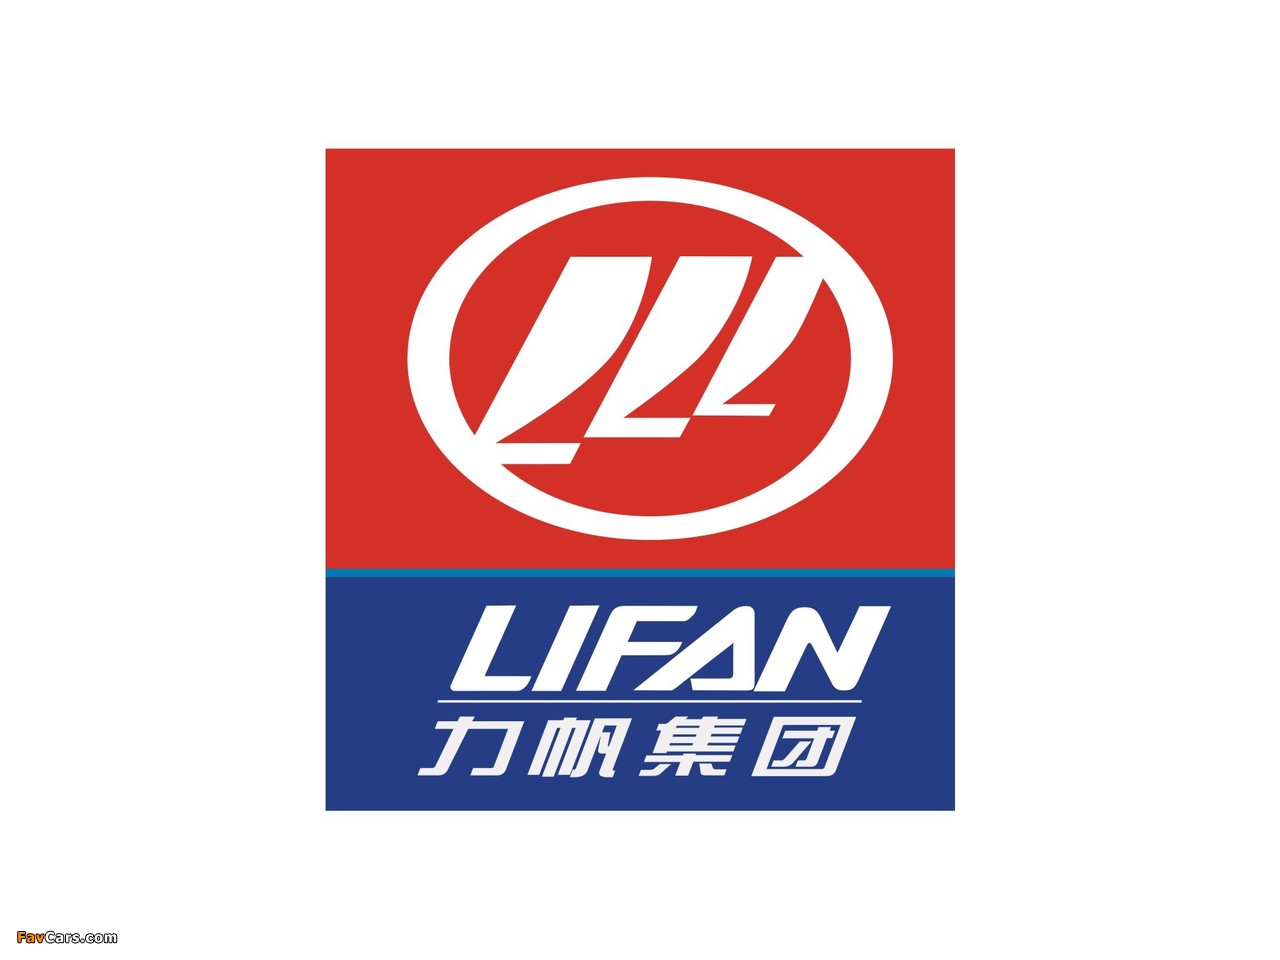 Lifan photos (1280 x 960)